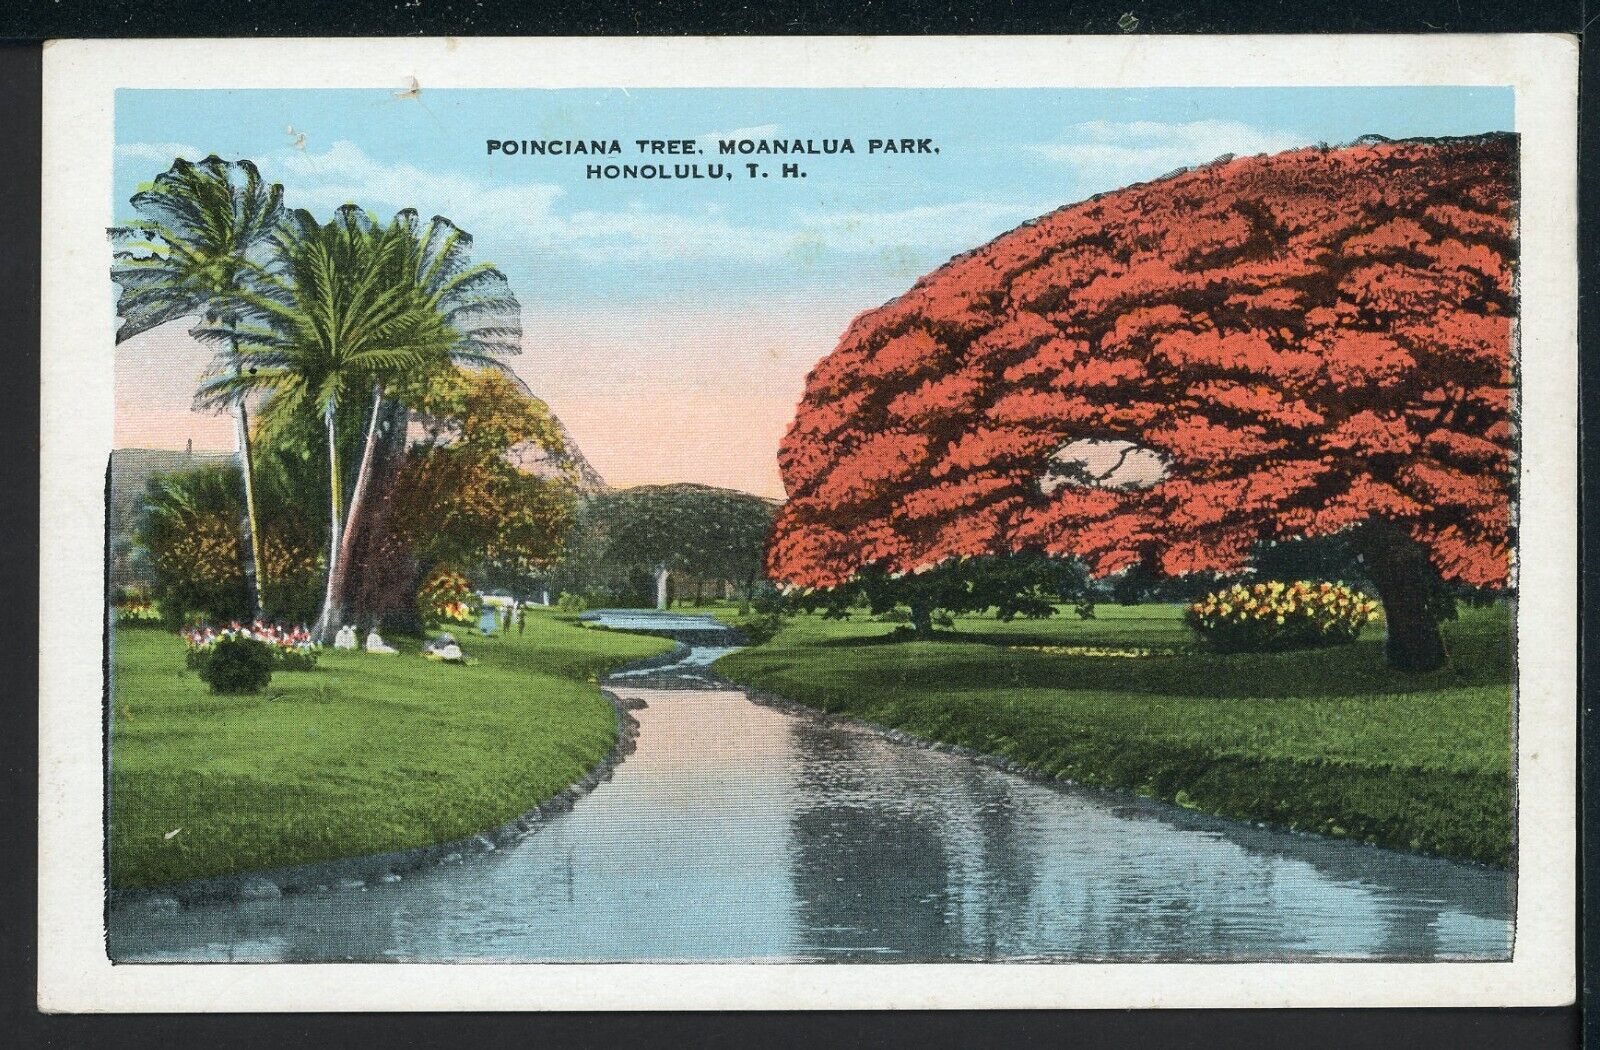 Early Poinciana Tree Moanalua Park Honolulu HI Historic Vintage Postcard M096a